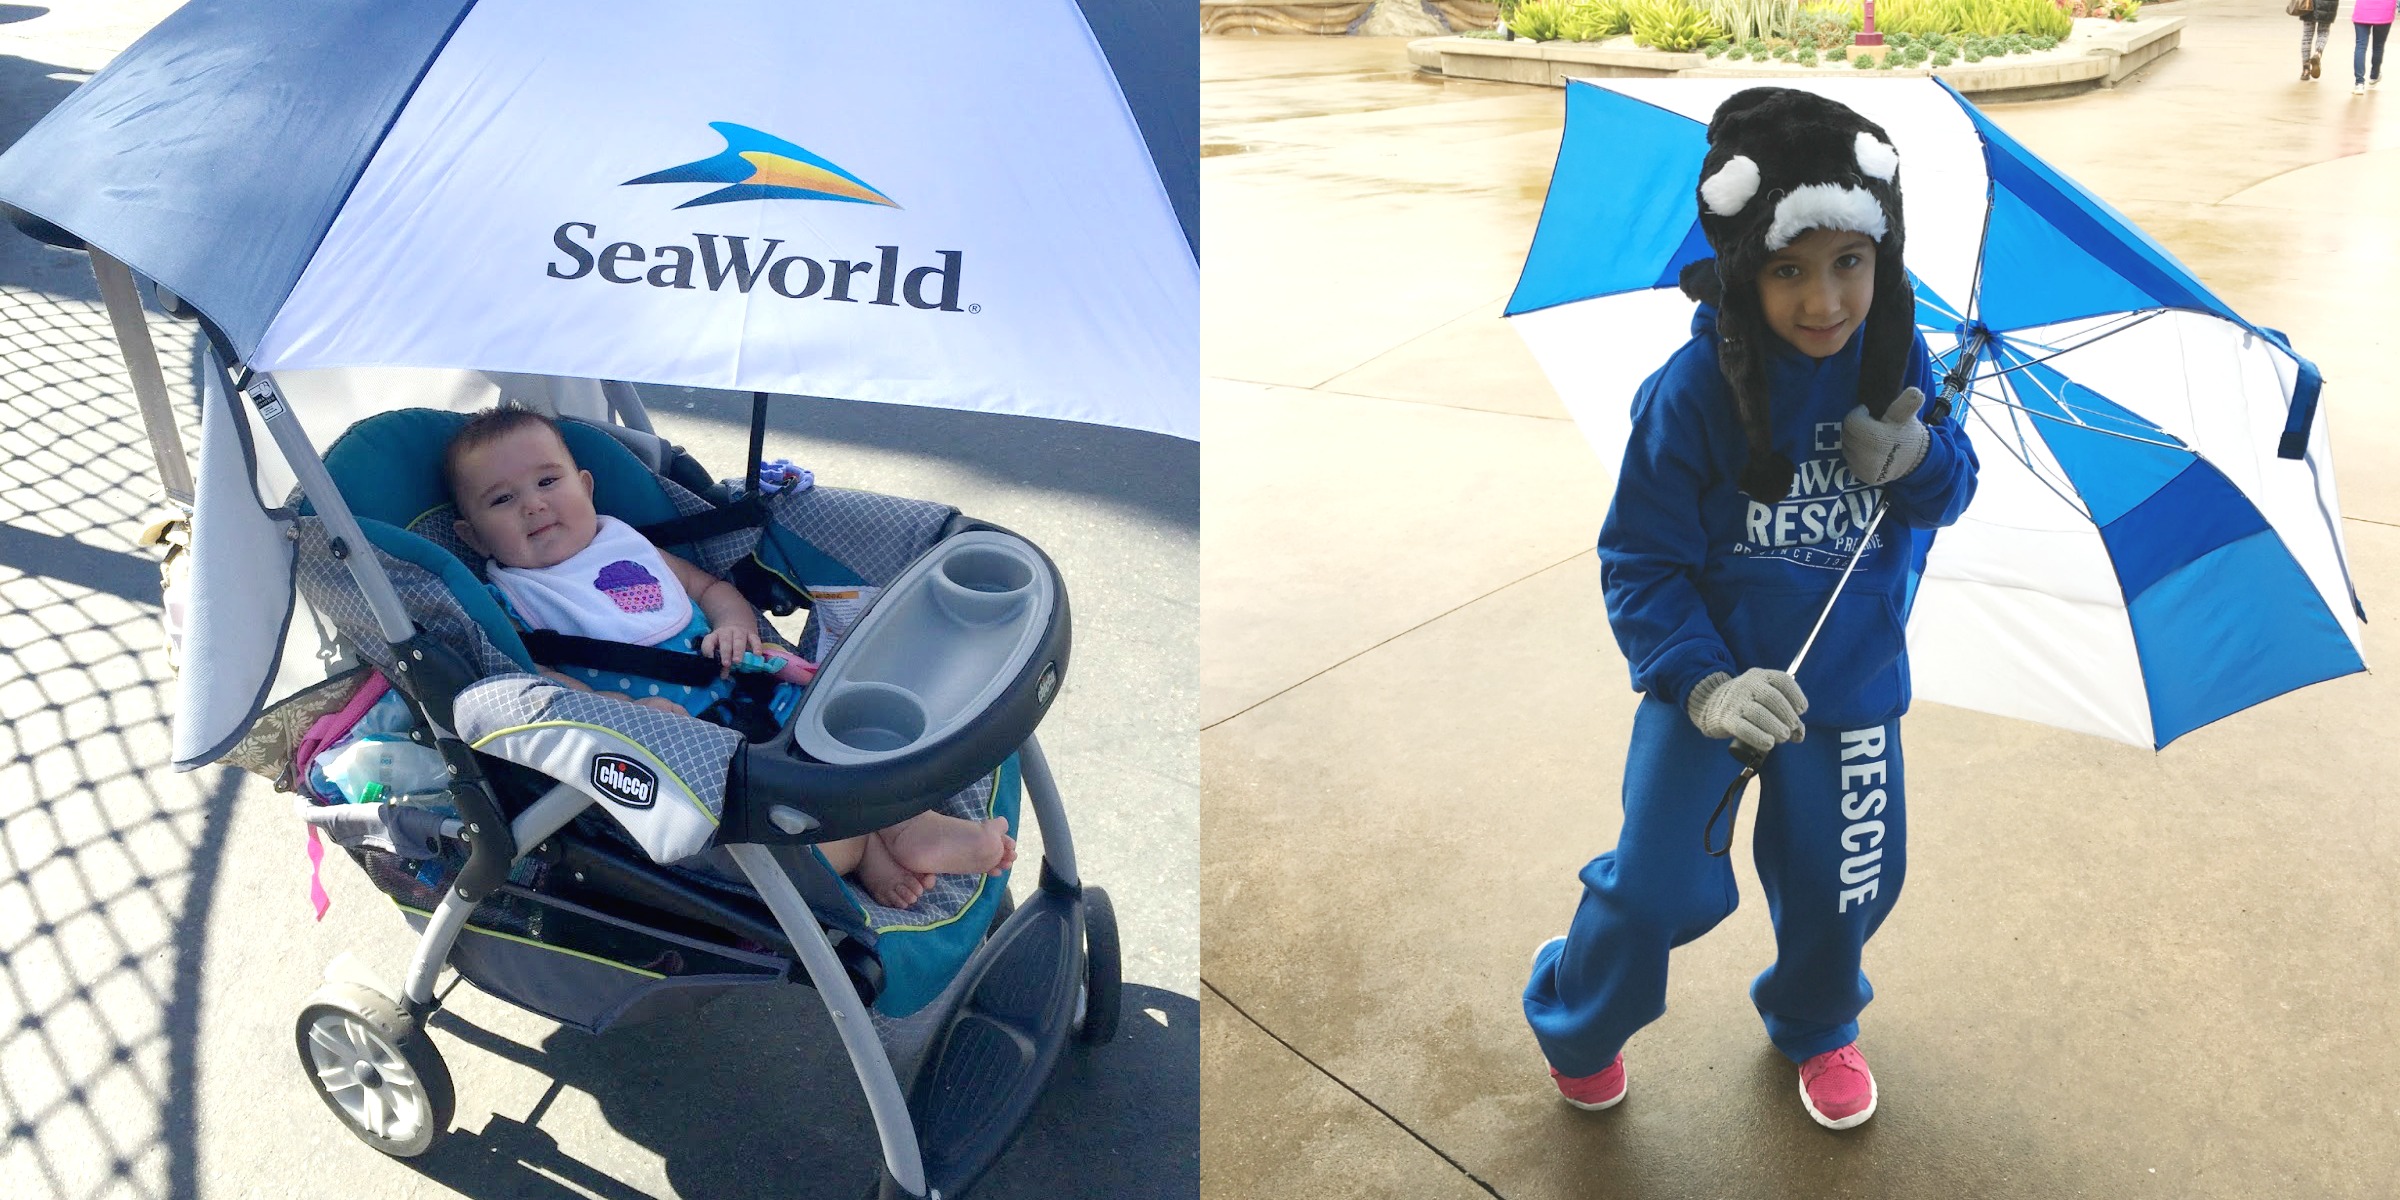 SeaWorld with young children umbrella